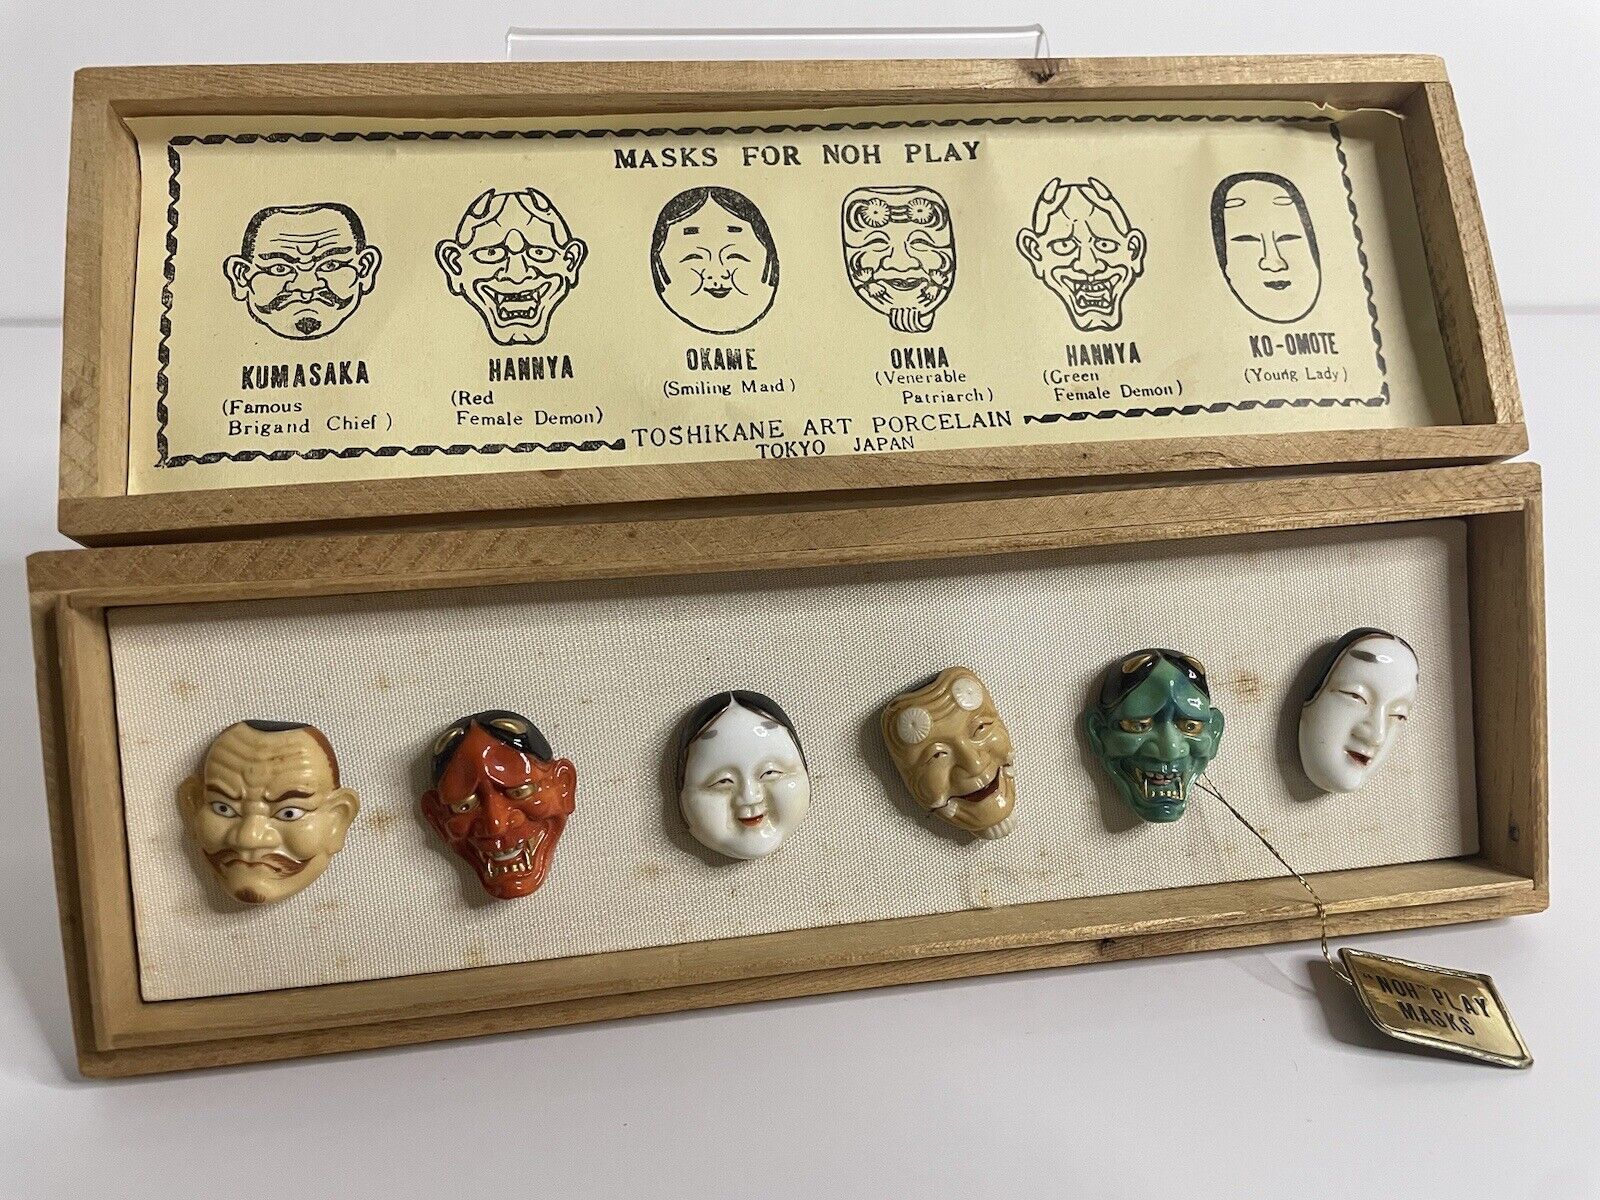 Rare Vintage Porcelain Toshikane Art Buttons 6 “Noh” Play Masks Complete Japan